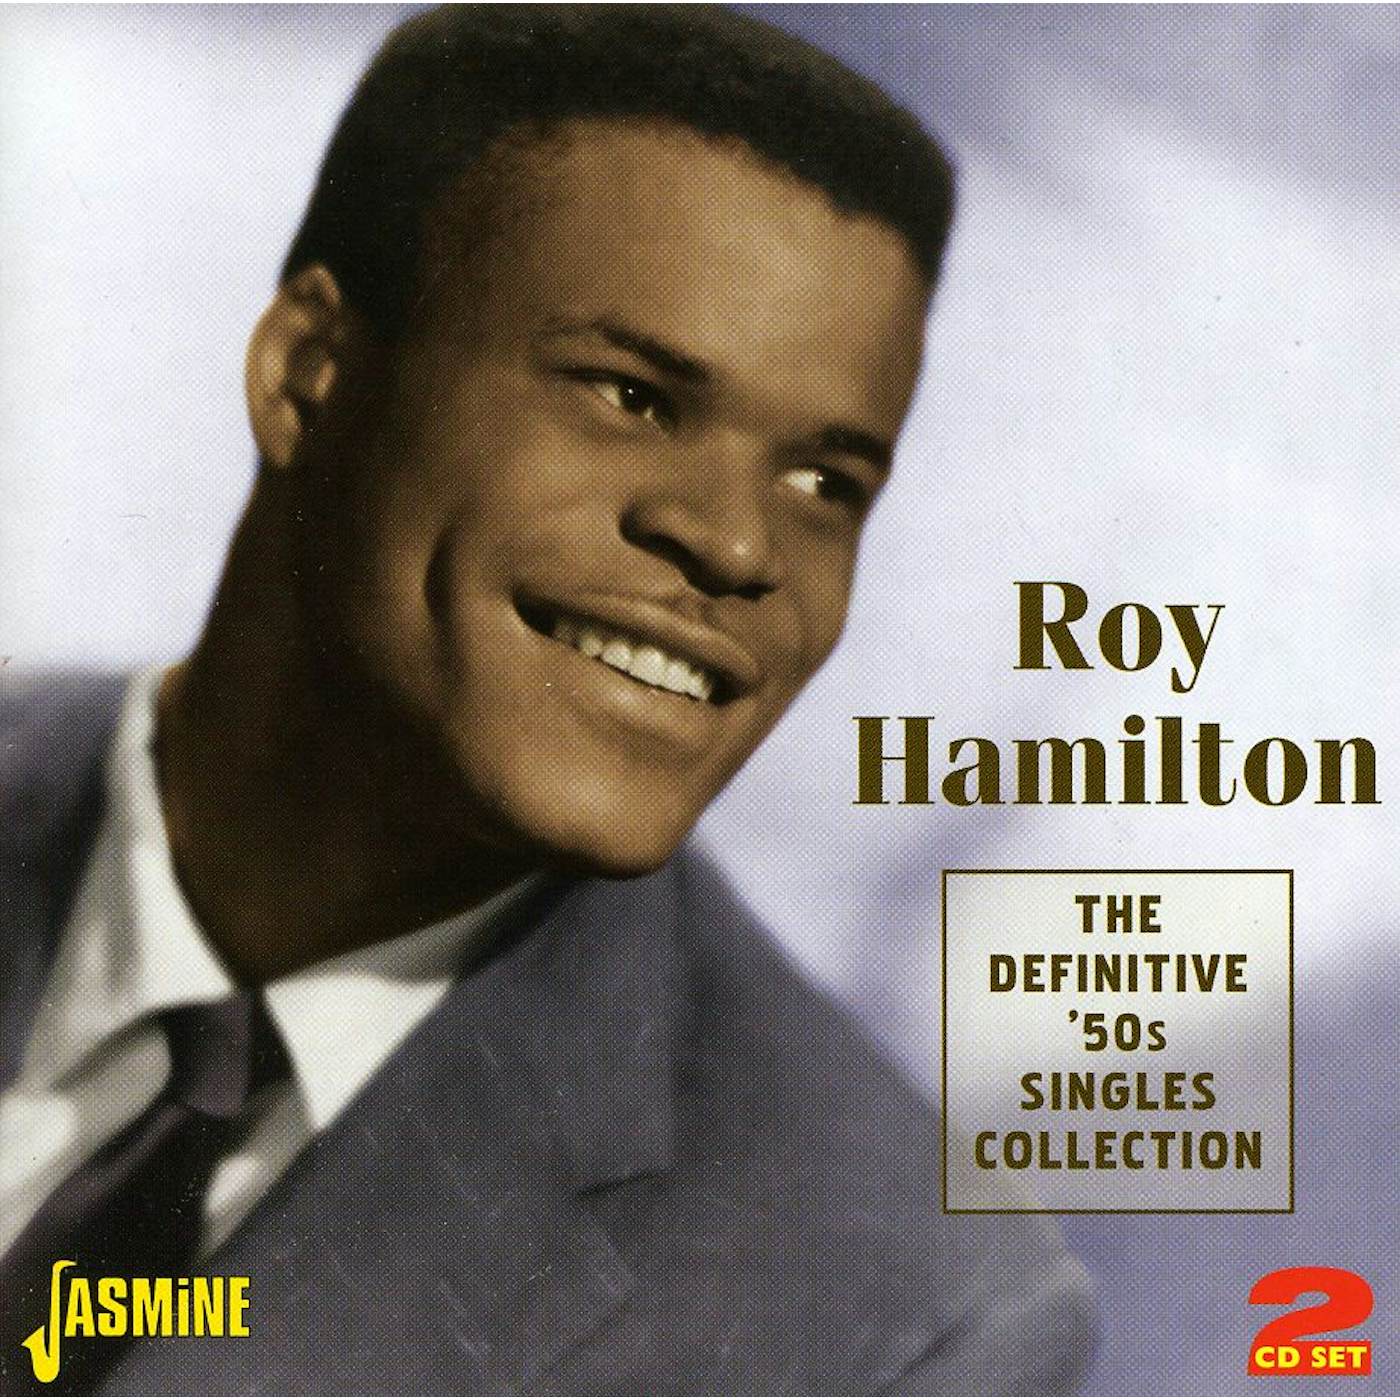 Roy Hamilton DEFINITIVE 50S SINGLES COLLECTION CD